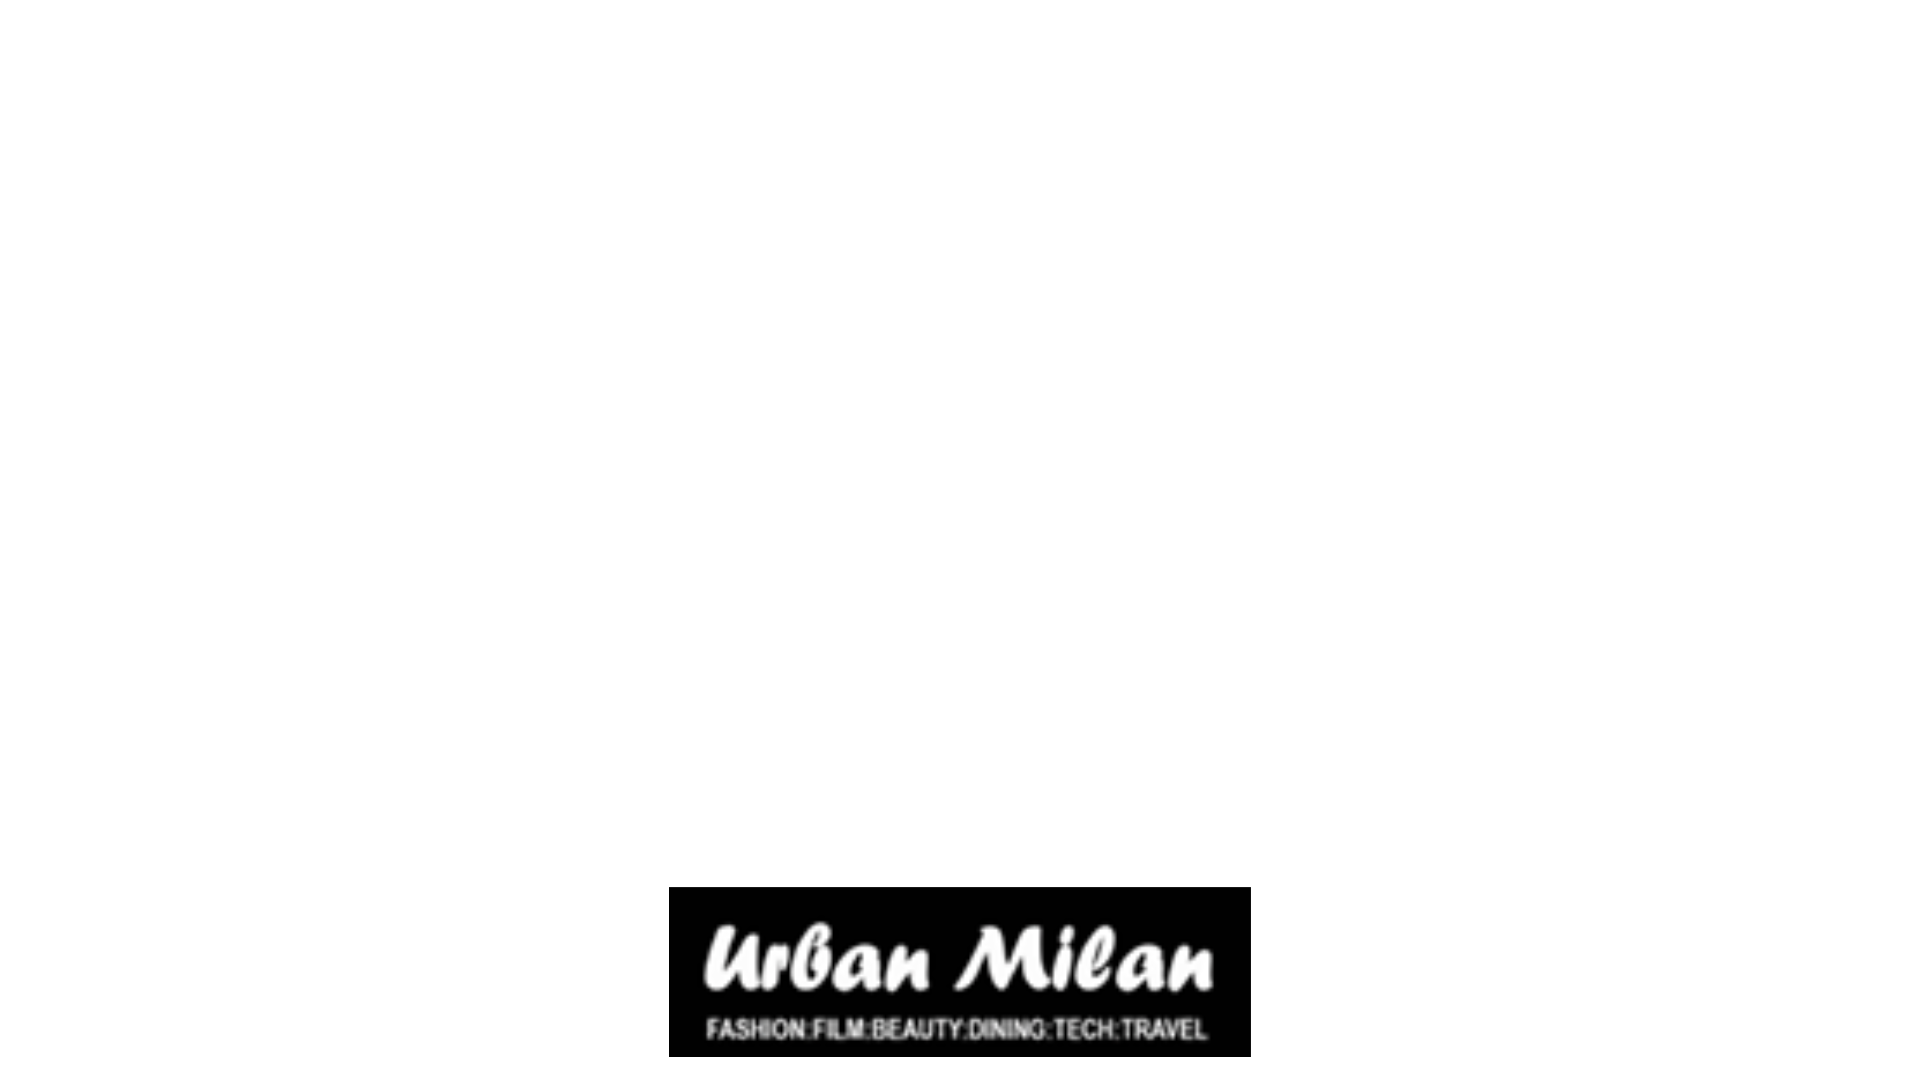 A black and white logo for urban milan on a white background.